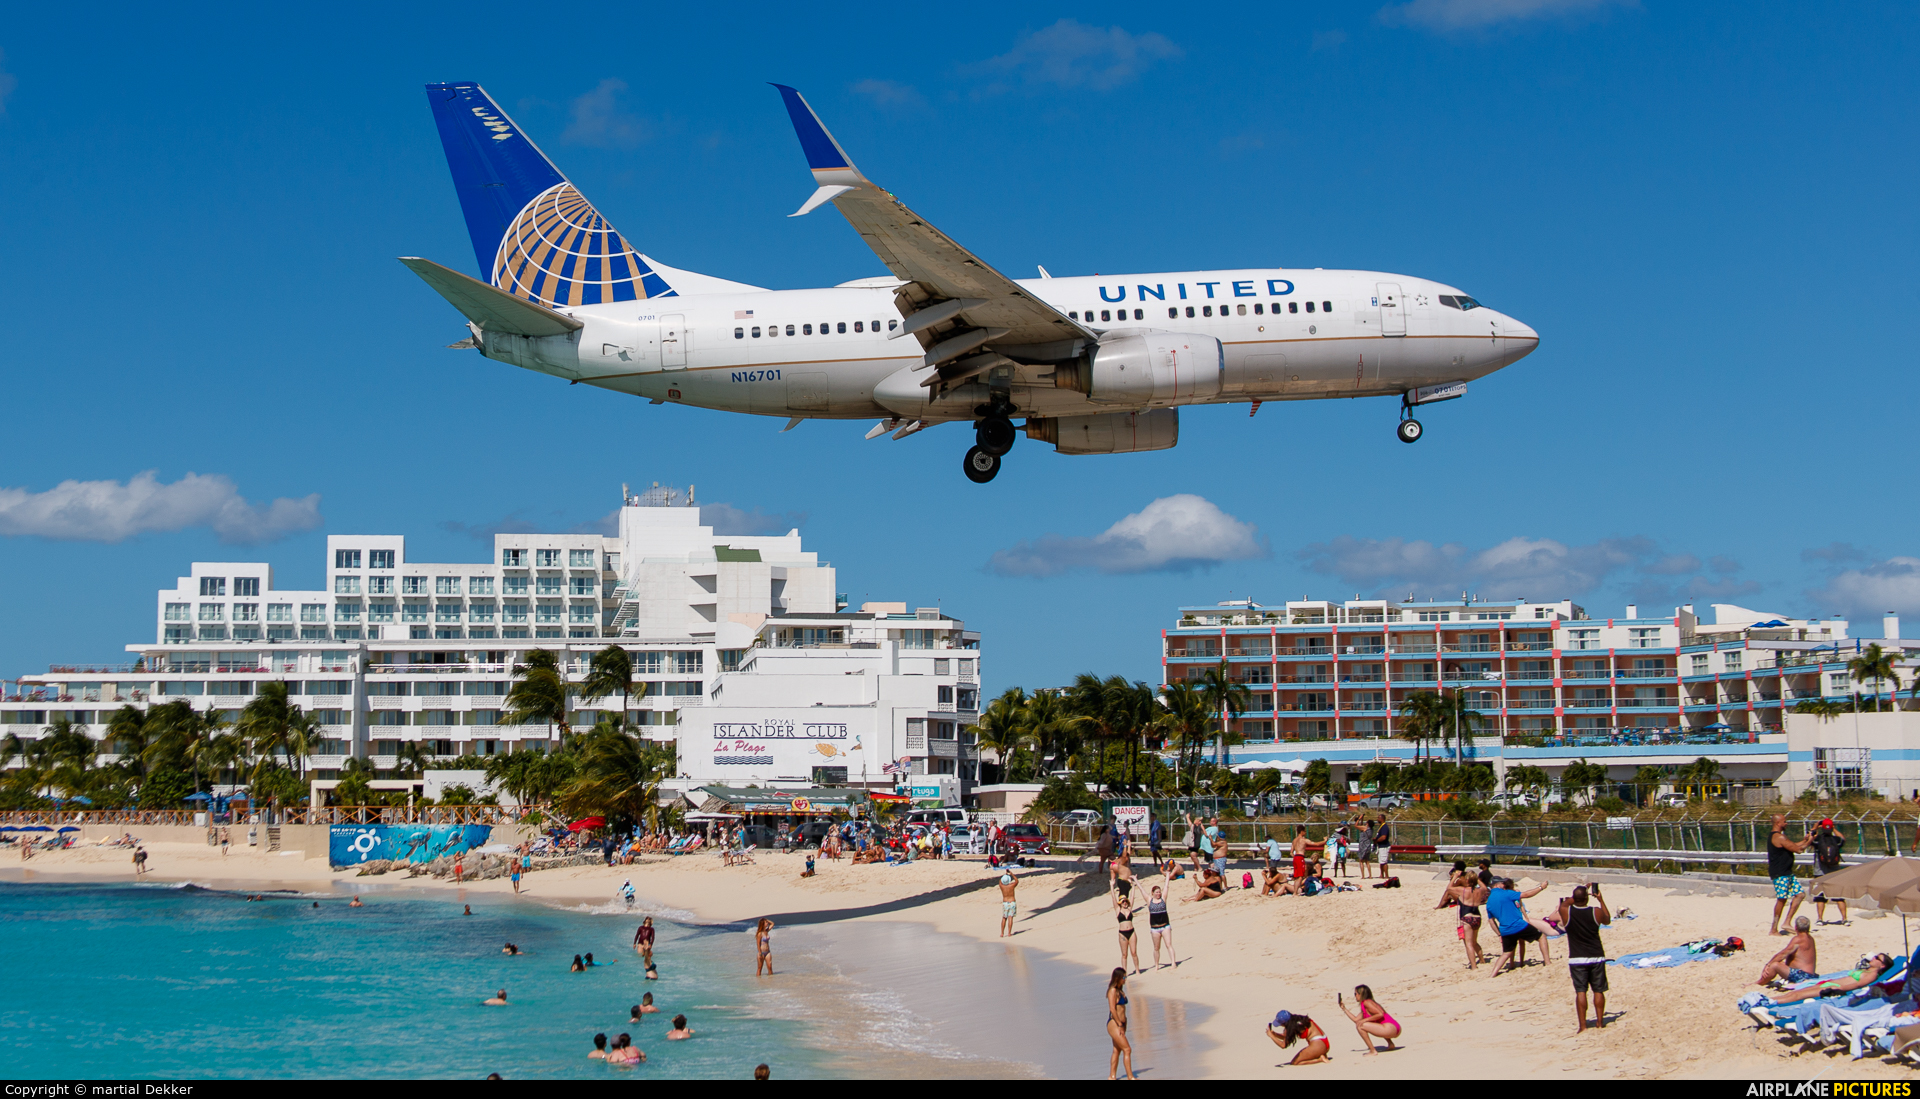 United Airlines N16701 aircraft at Sint Maarten - Princess Juliana Intl